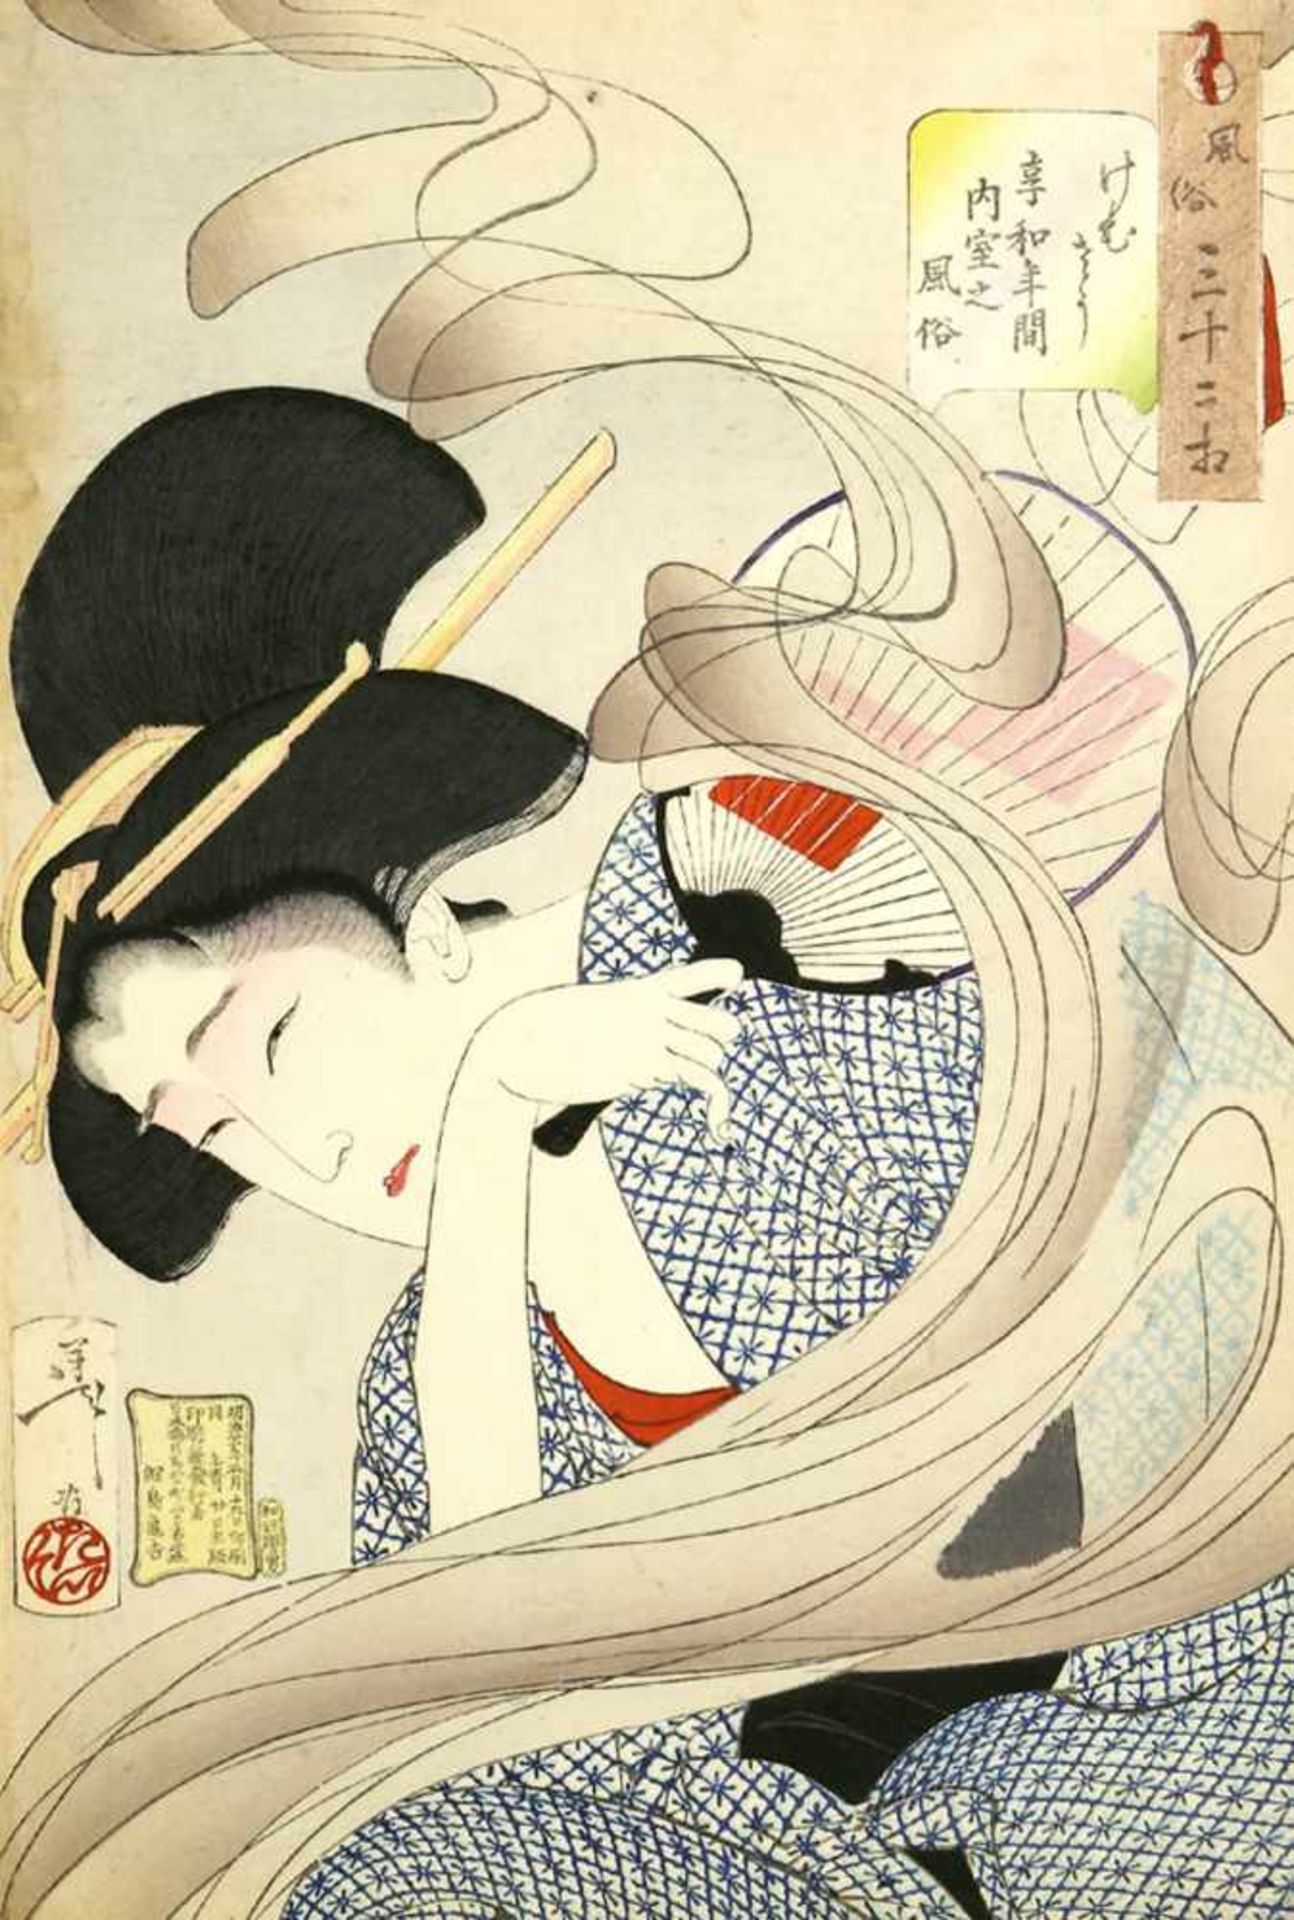 Japanischer Farbholzschnitt, Yoshitoshi, Tsukioka (1839 - 1892)Serie: Fûzoku sanjûnisô (32 Aspekte